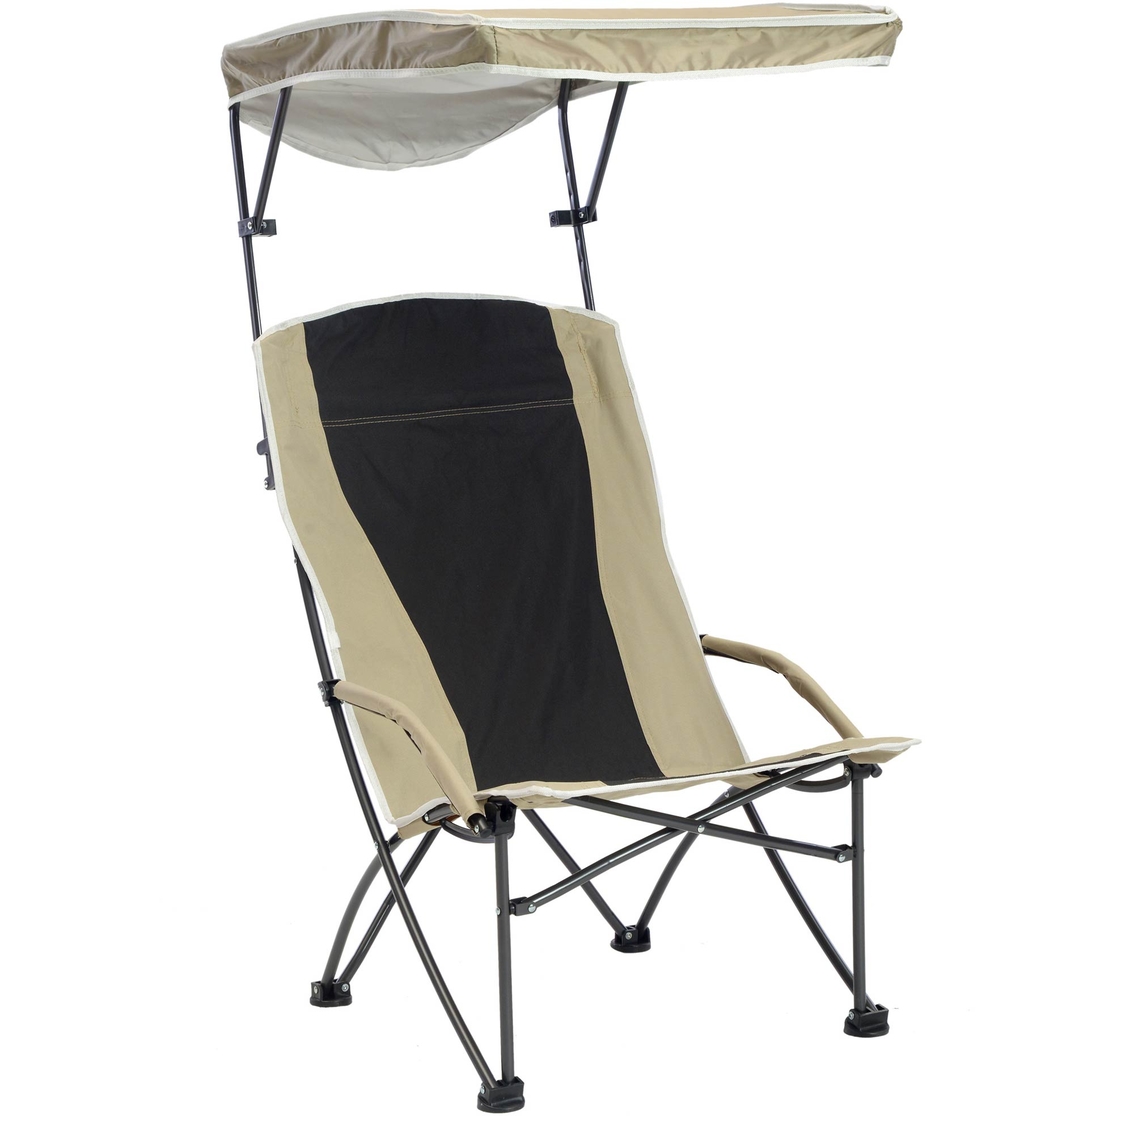 Pro Comfort High Back Shade Folding Chair - Tan/Black - Image 1 of 9